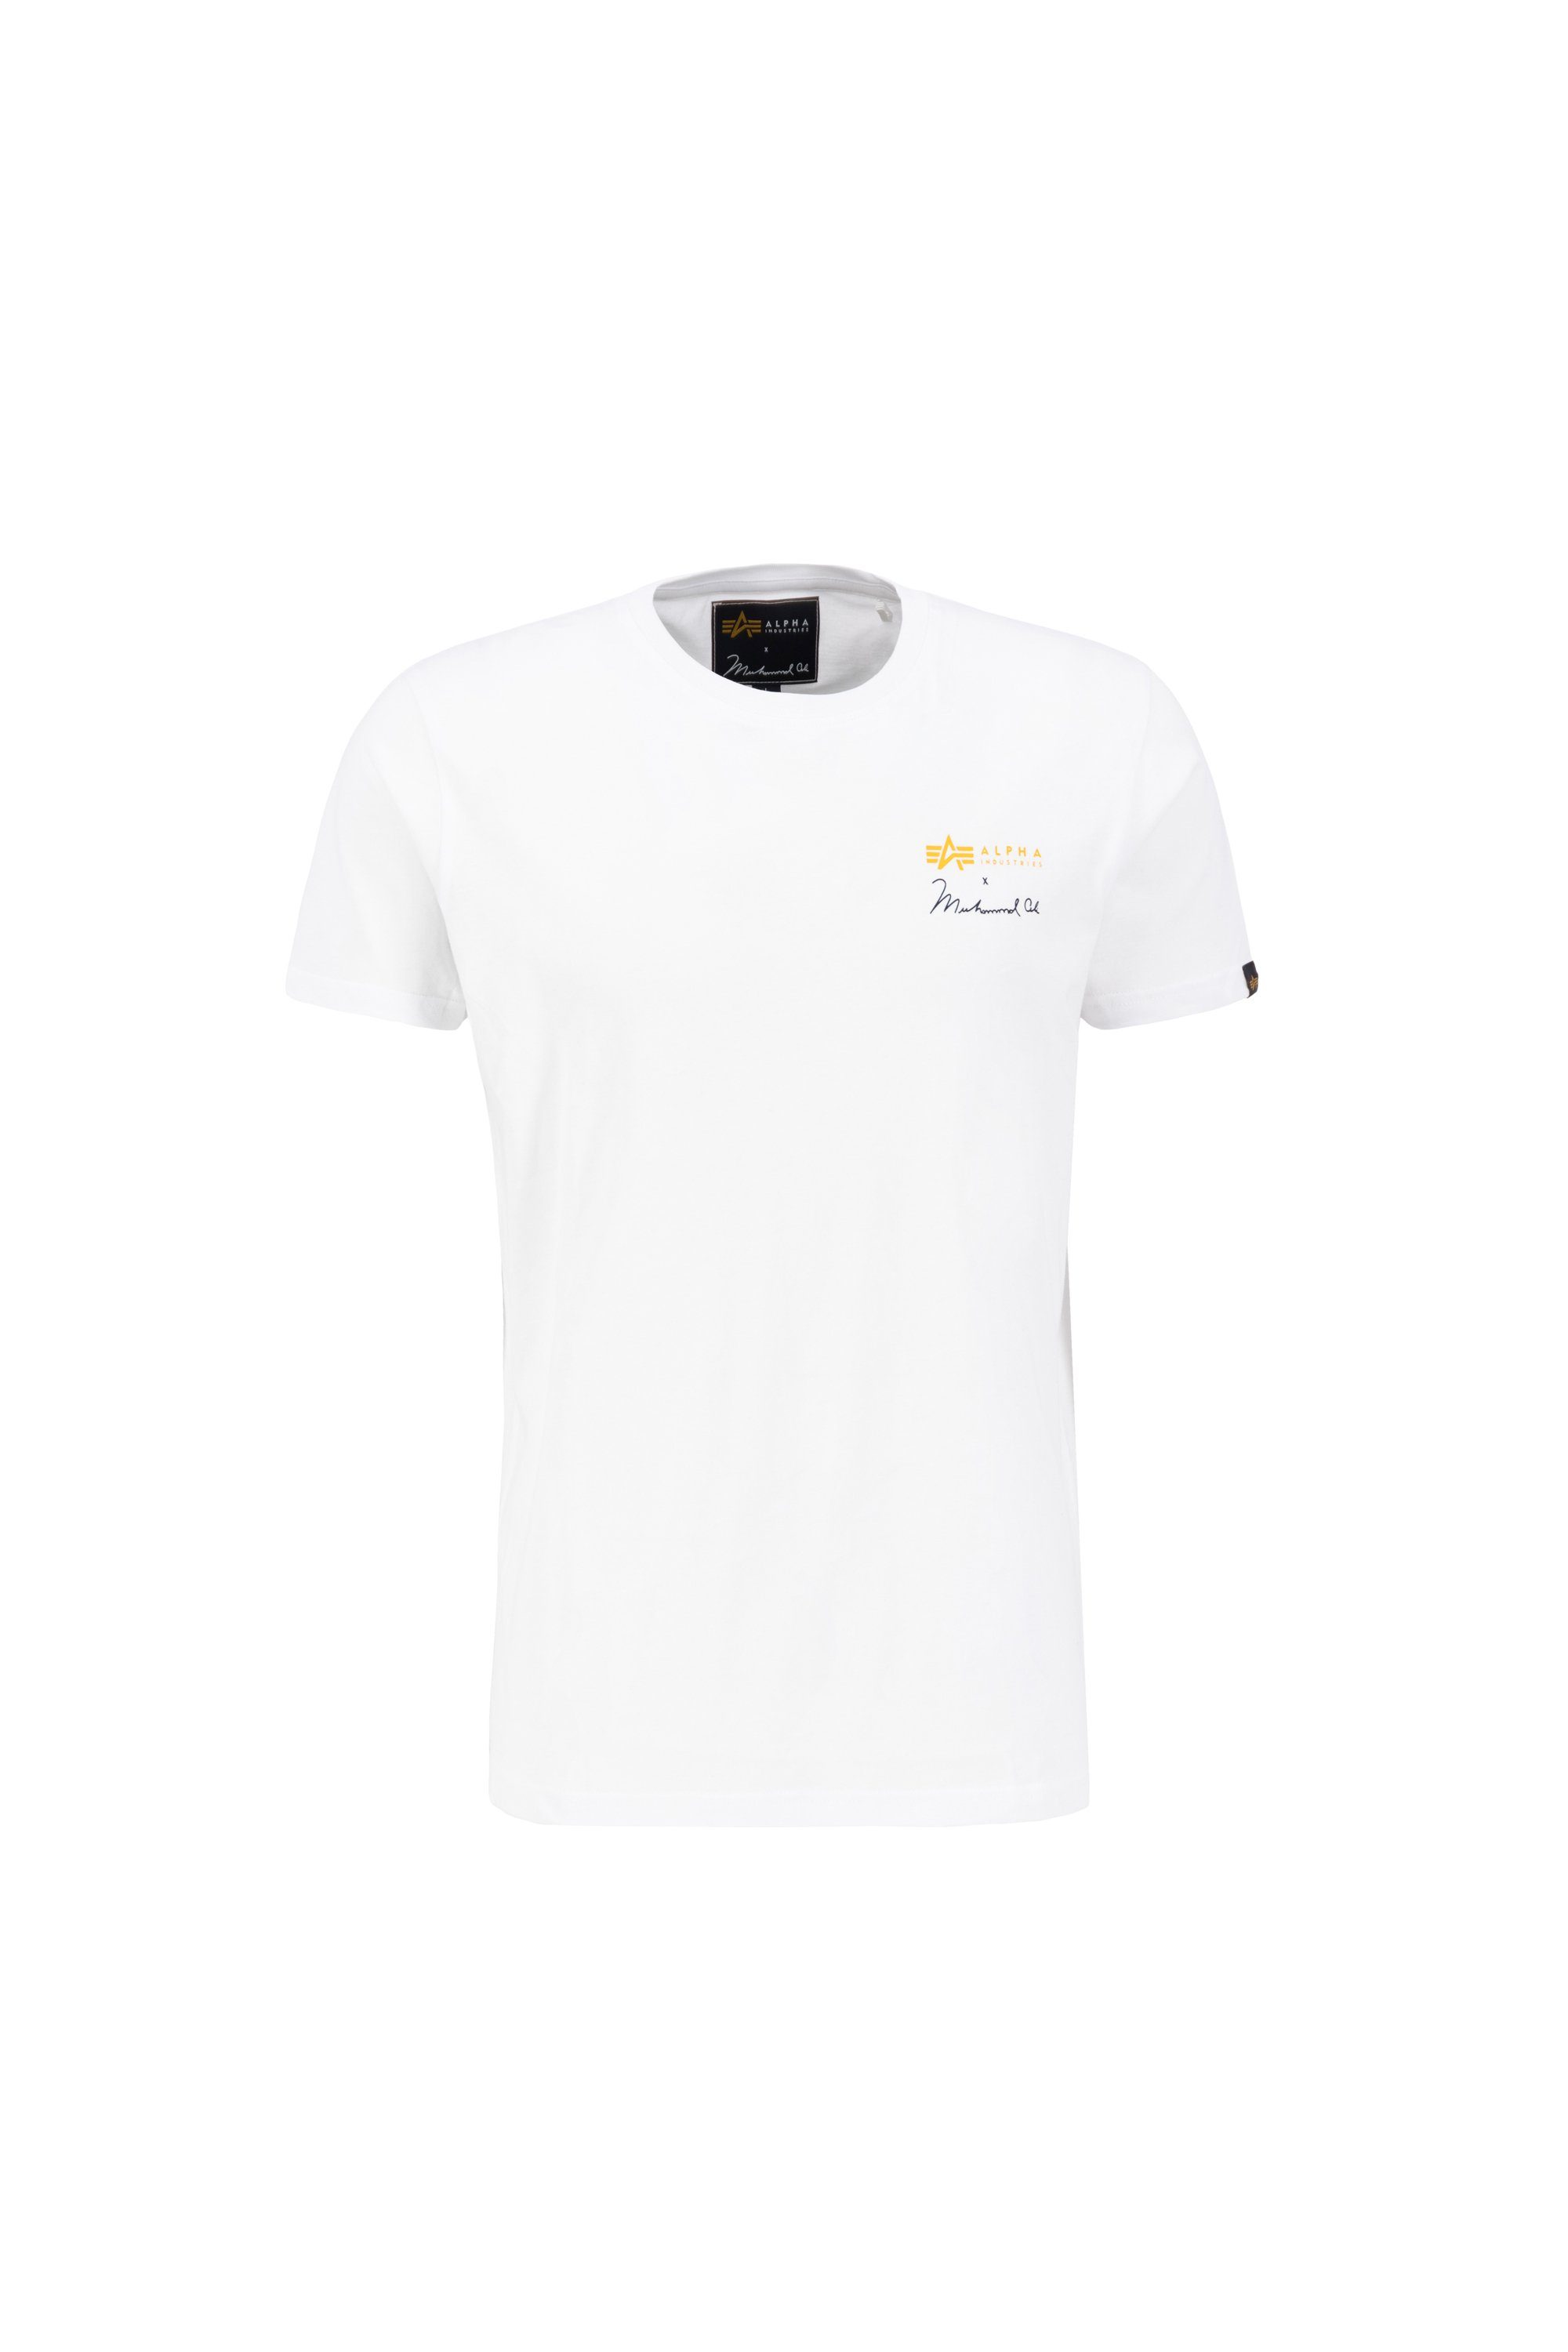 Alpha OTTO Industries T-shirt BP Industries T-Shirts T | Muhammad Men Alpha online shop - Ali